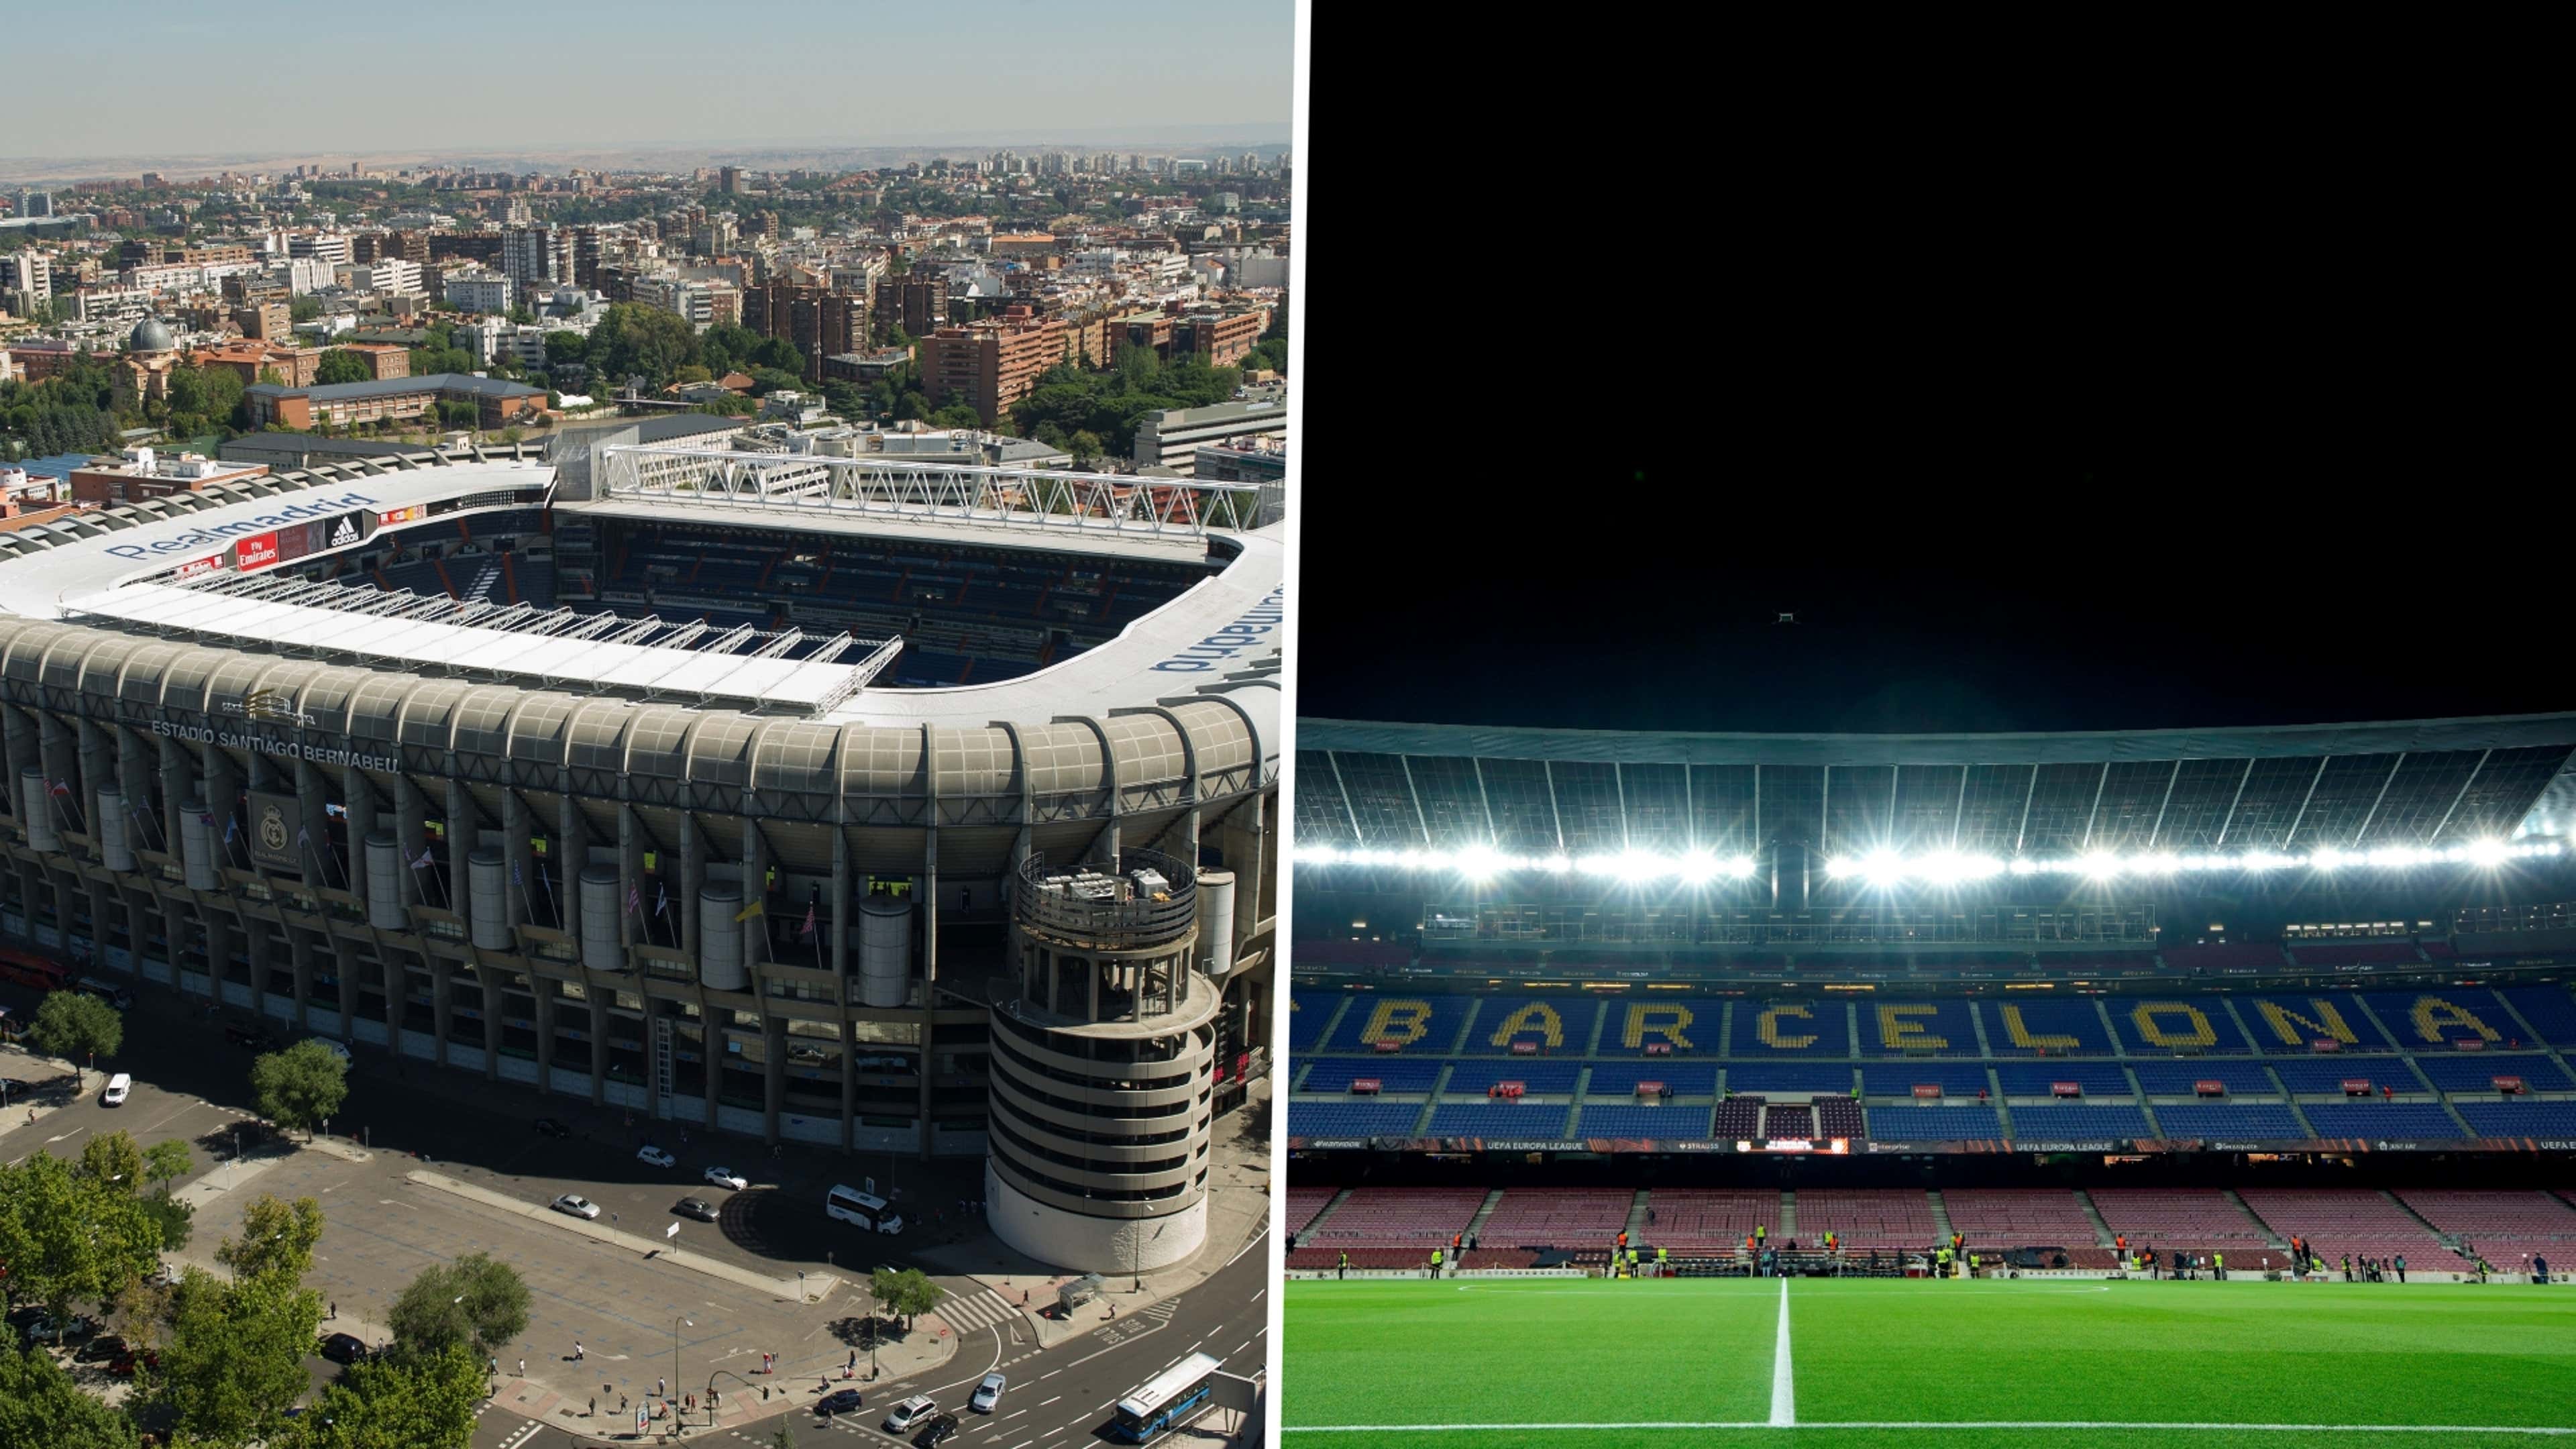 Primeira Liga Stadiums 